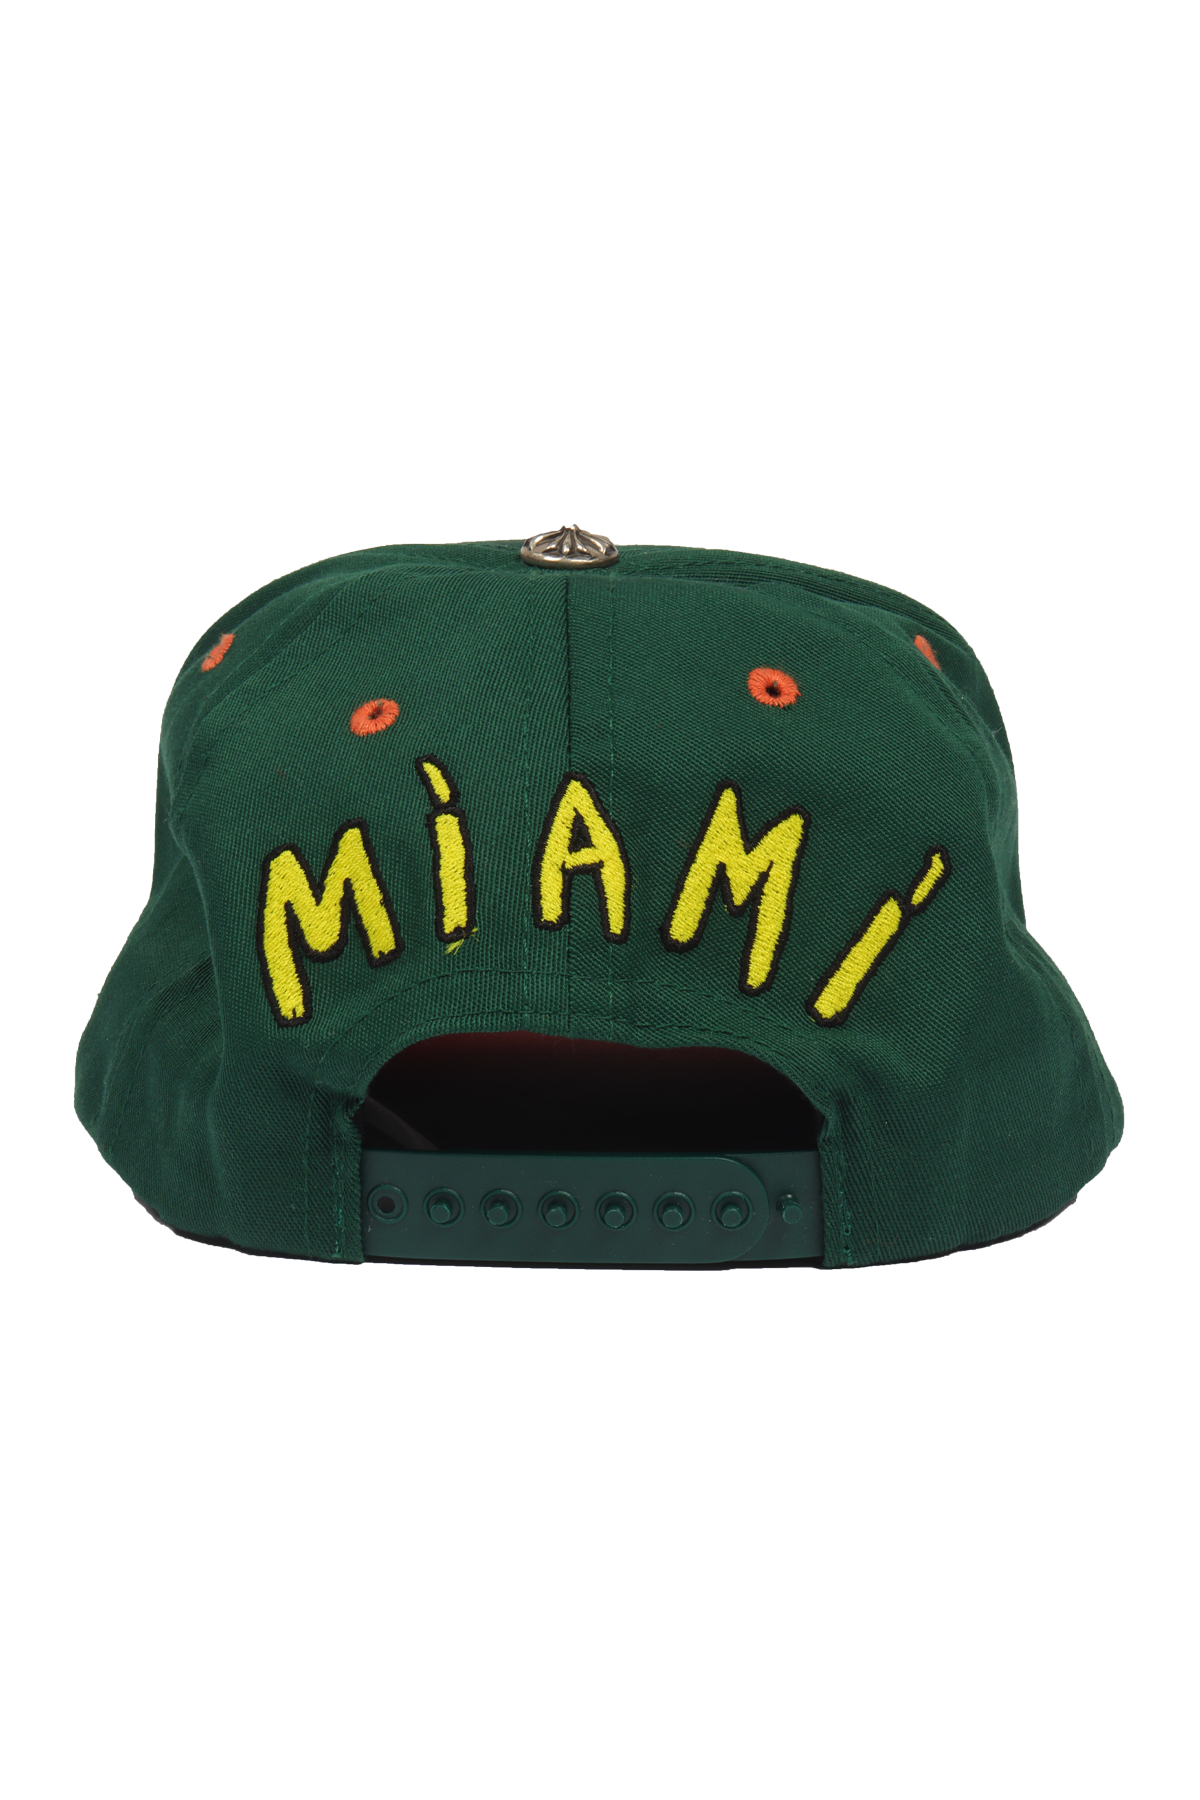 Miami Exclusive Art Basel Trucker Hat